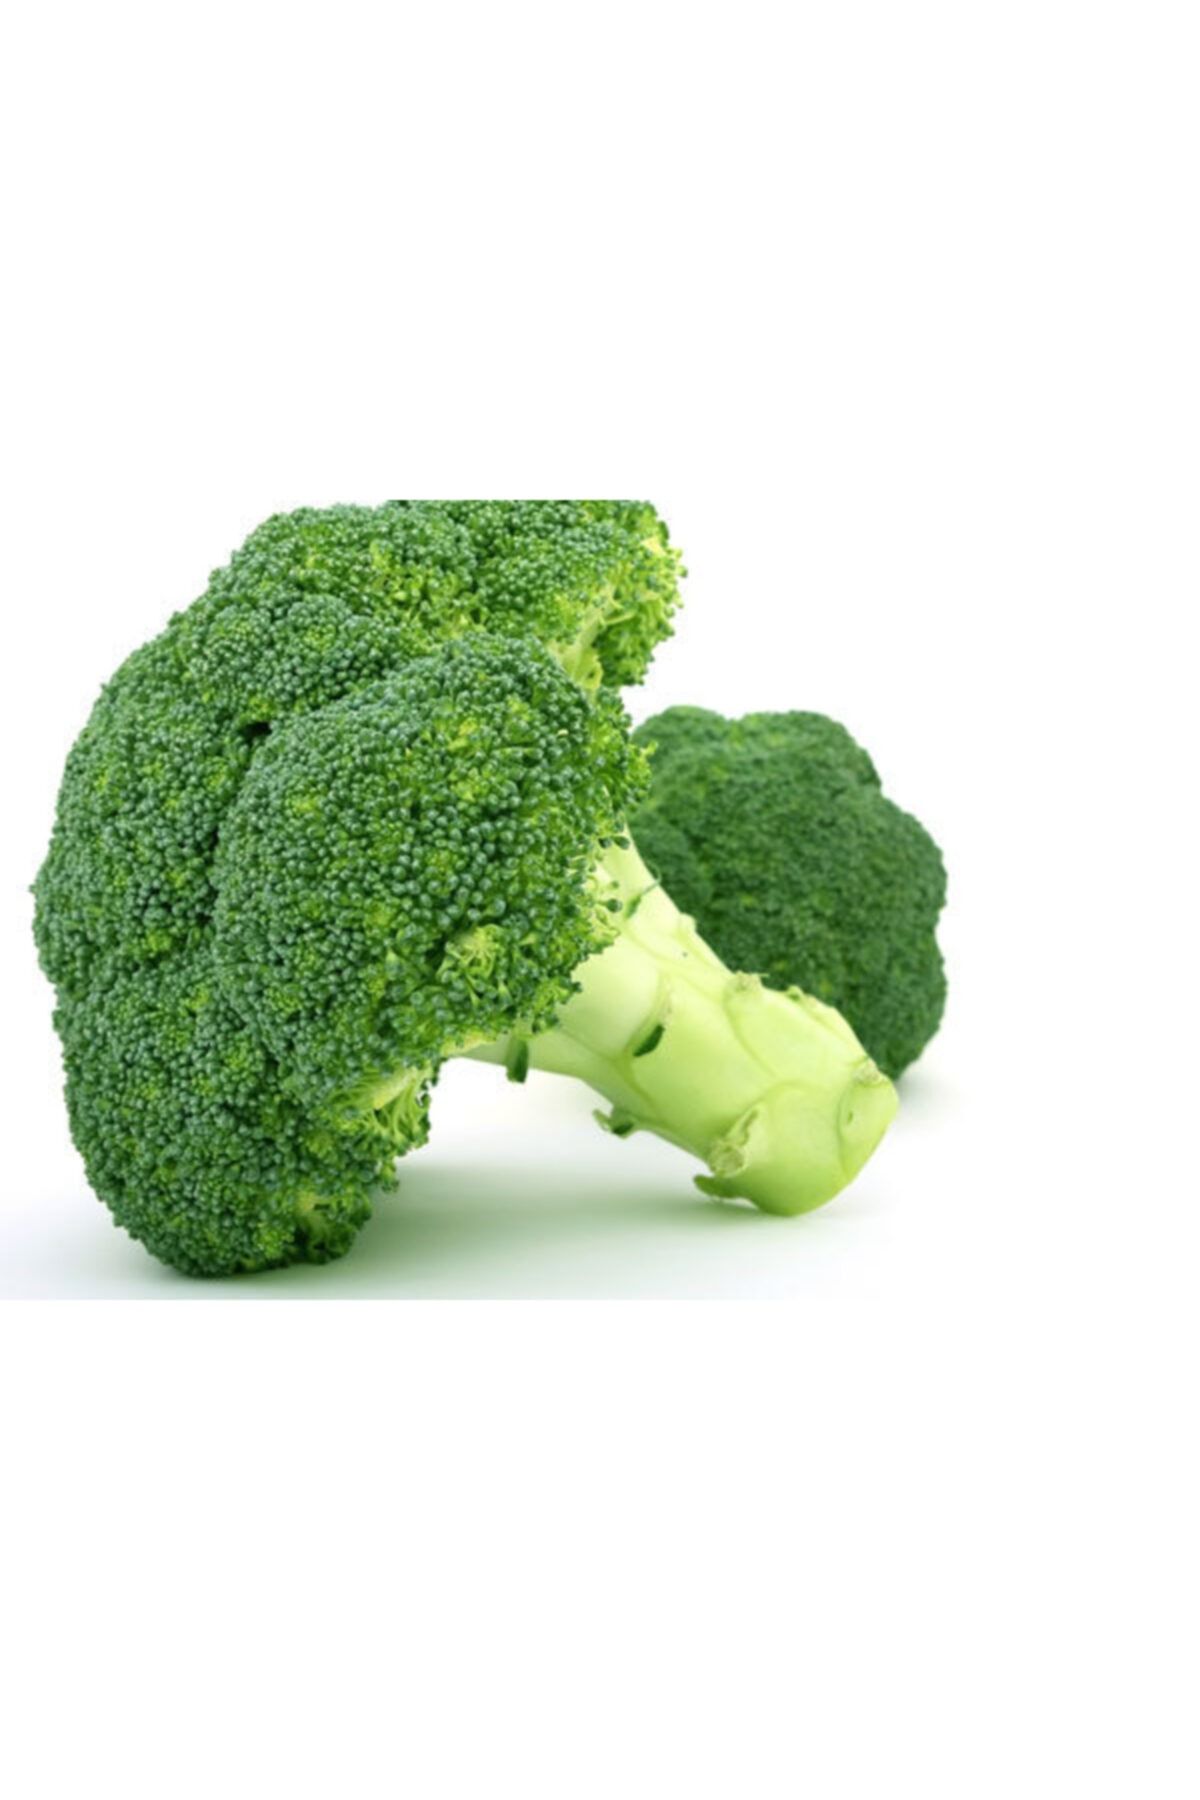 TROPİKAL Brokoli Tohumu - 50 Adet